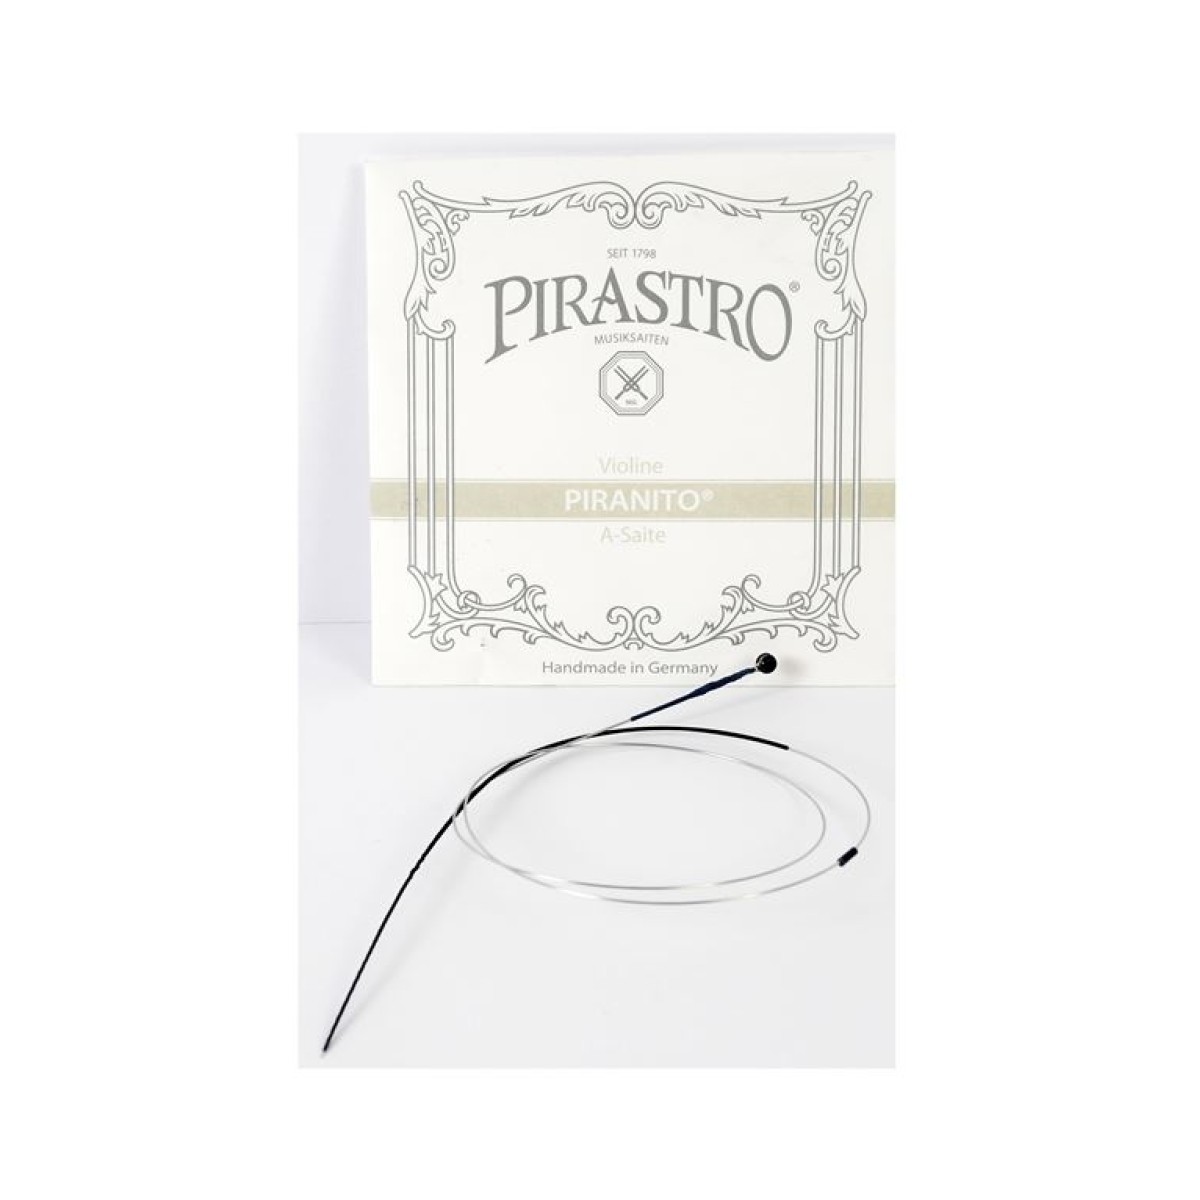 PIRASTRO Piranito D615300 Χορδή Βιολιού